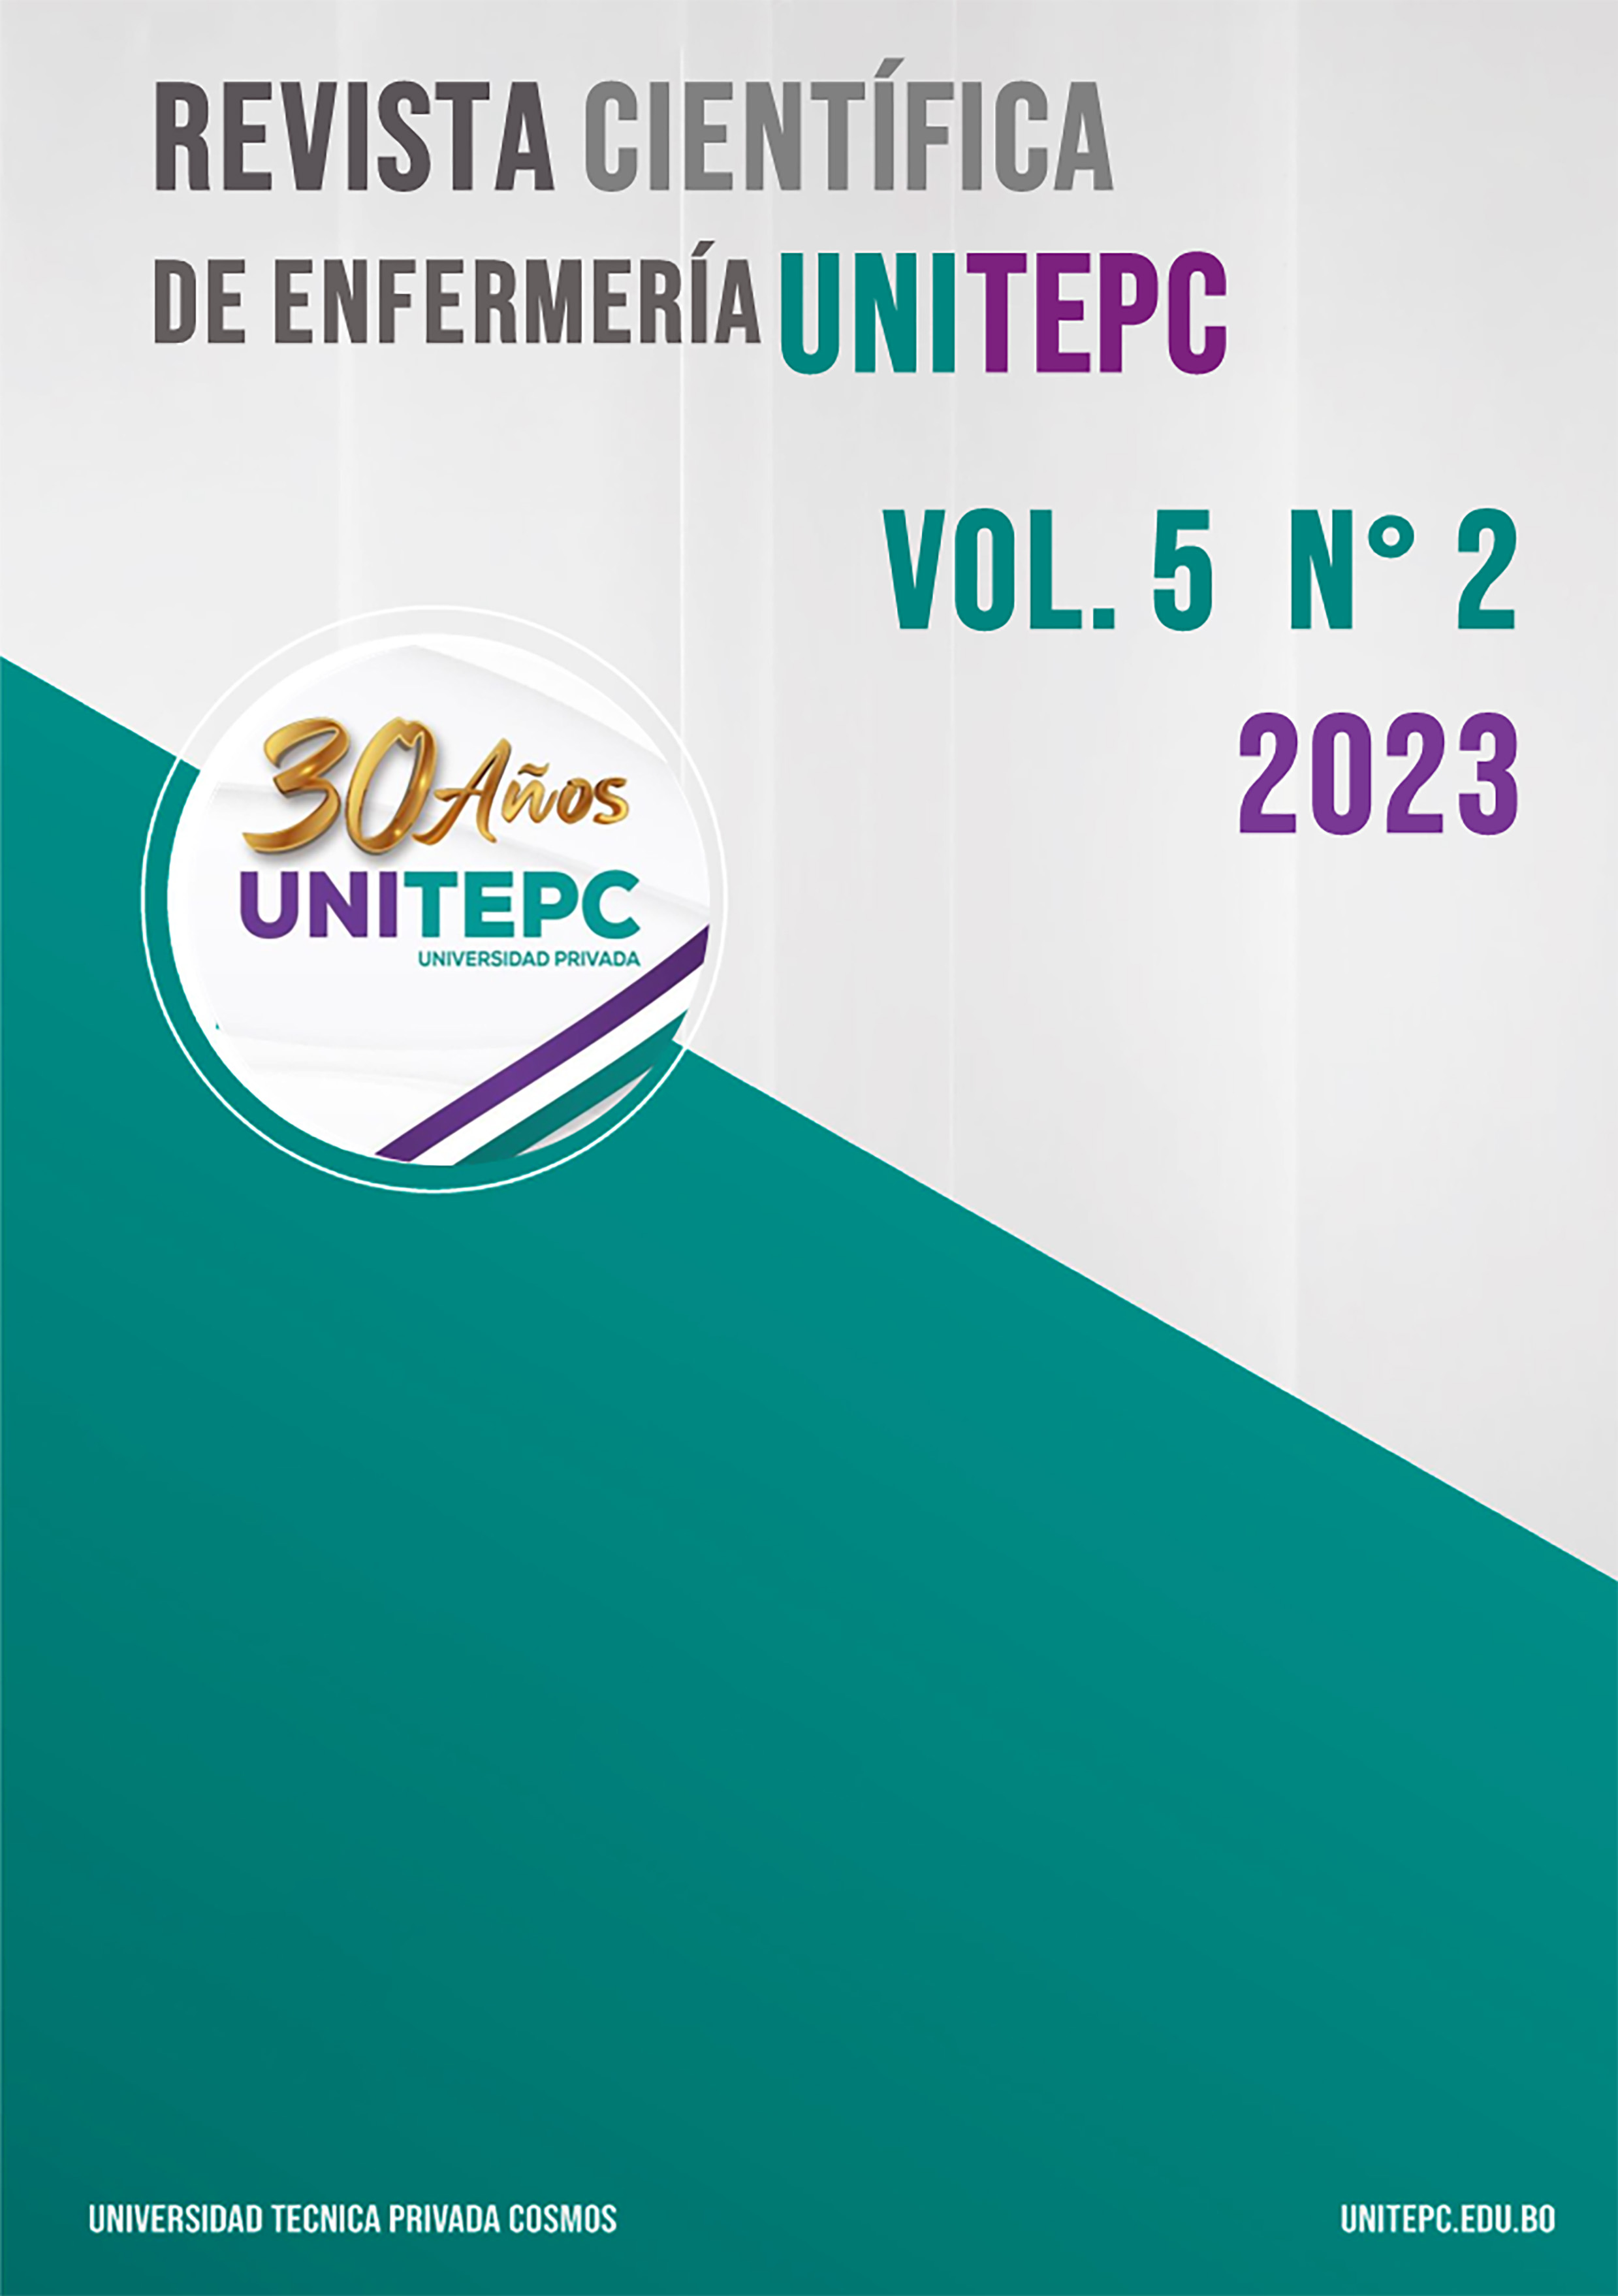 					Visualizar v. 5 n. 2 (2023): Revista Científica de Enfermería UNITEPC
				